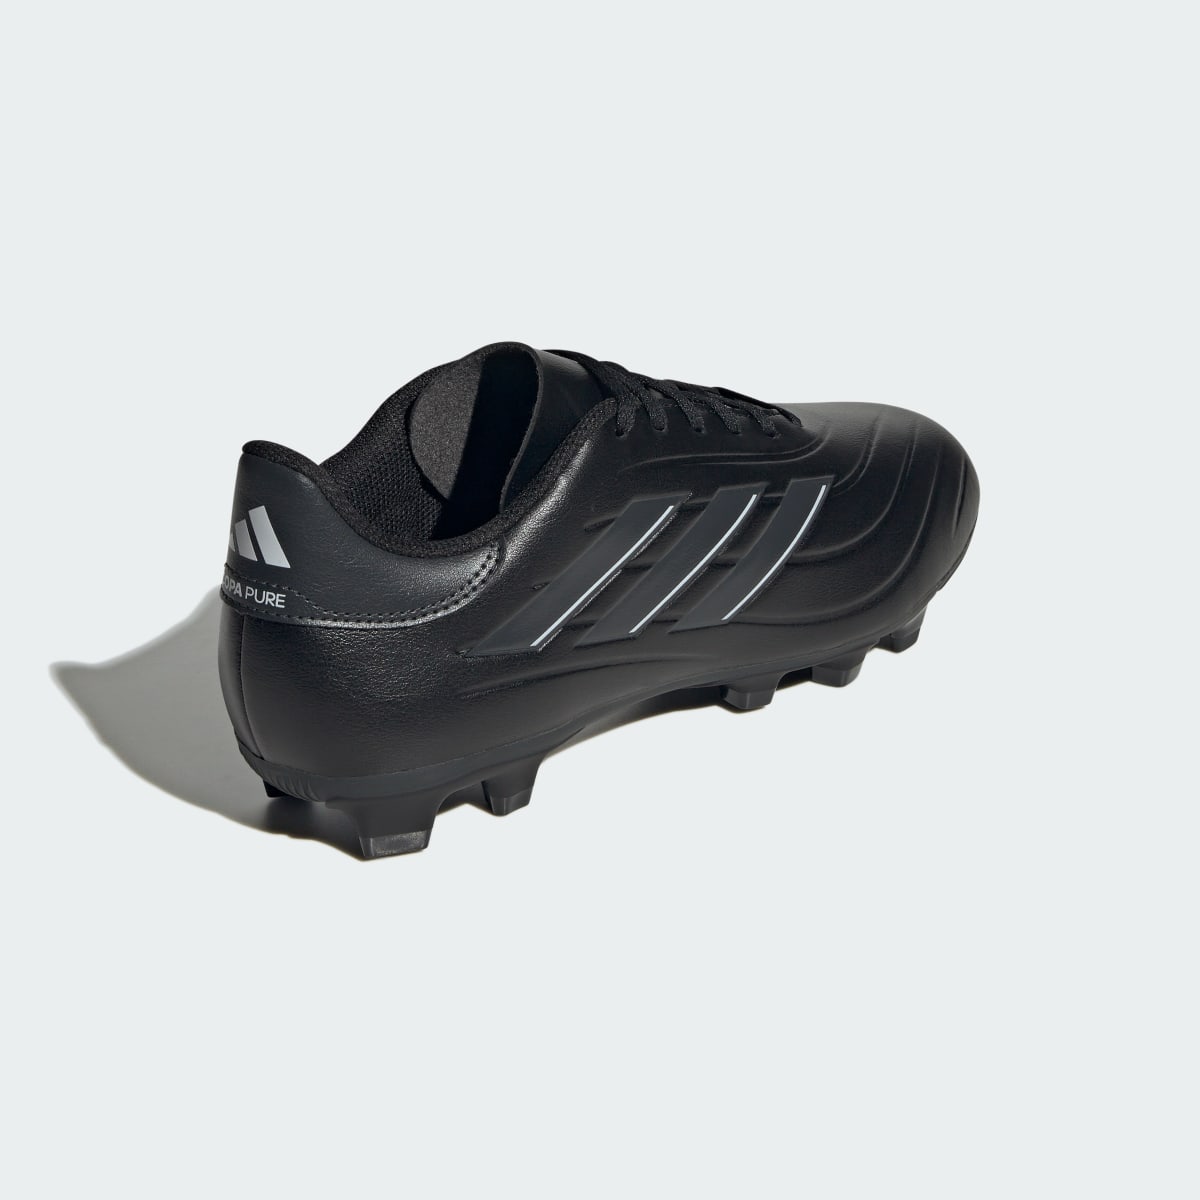 Adidas Copa Pure II Club Flexible Ground Boots. 6